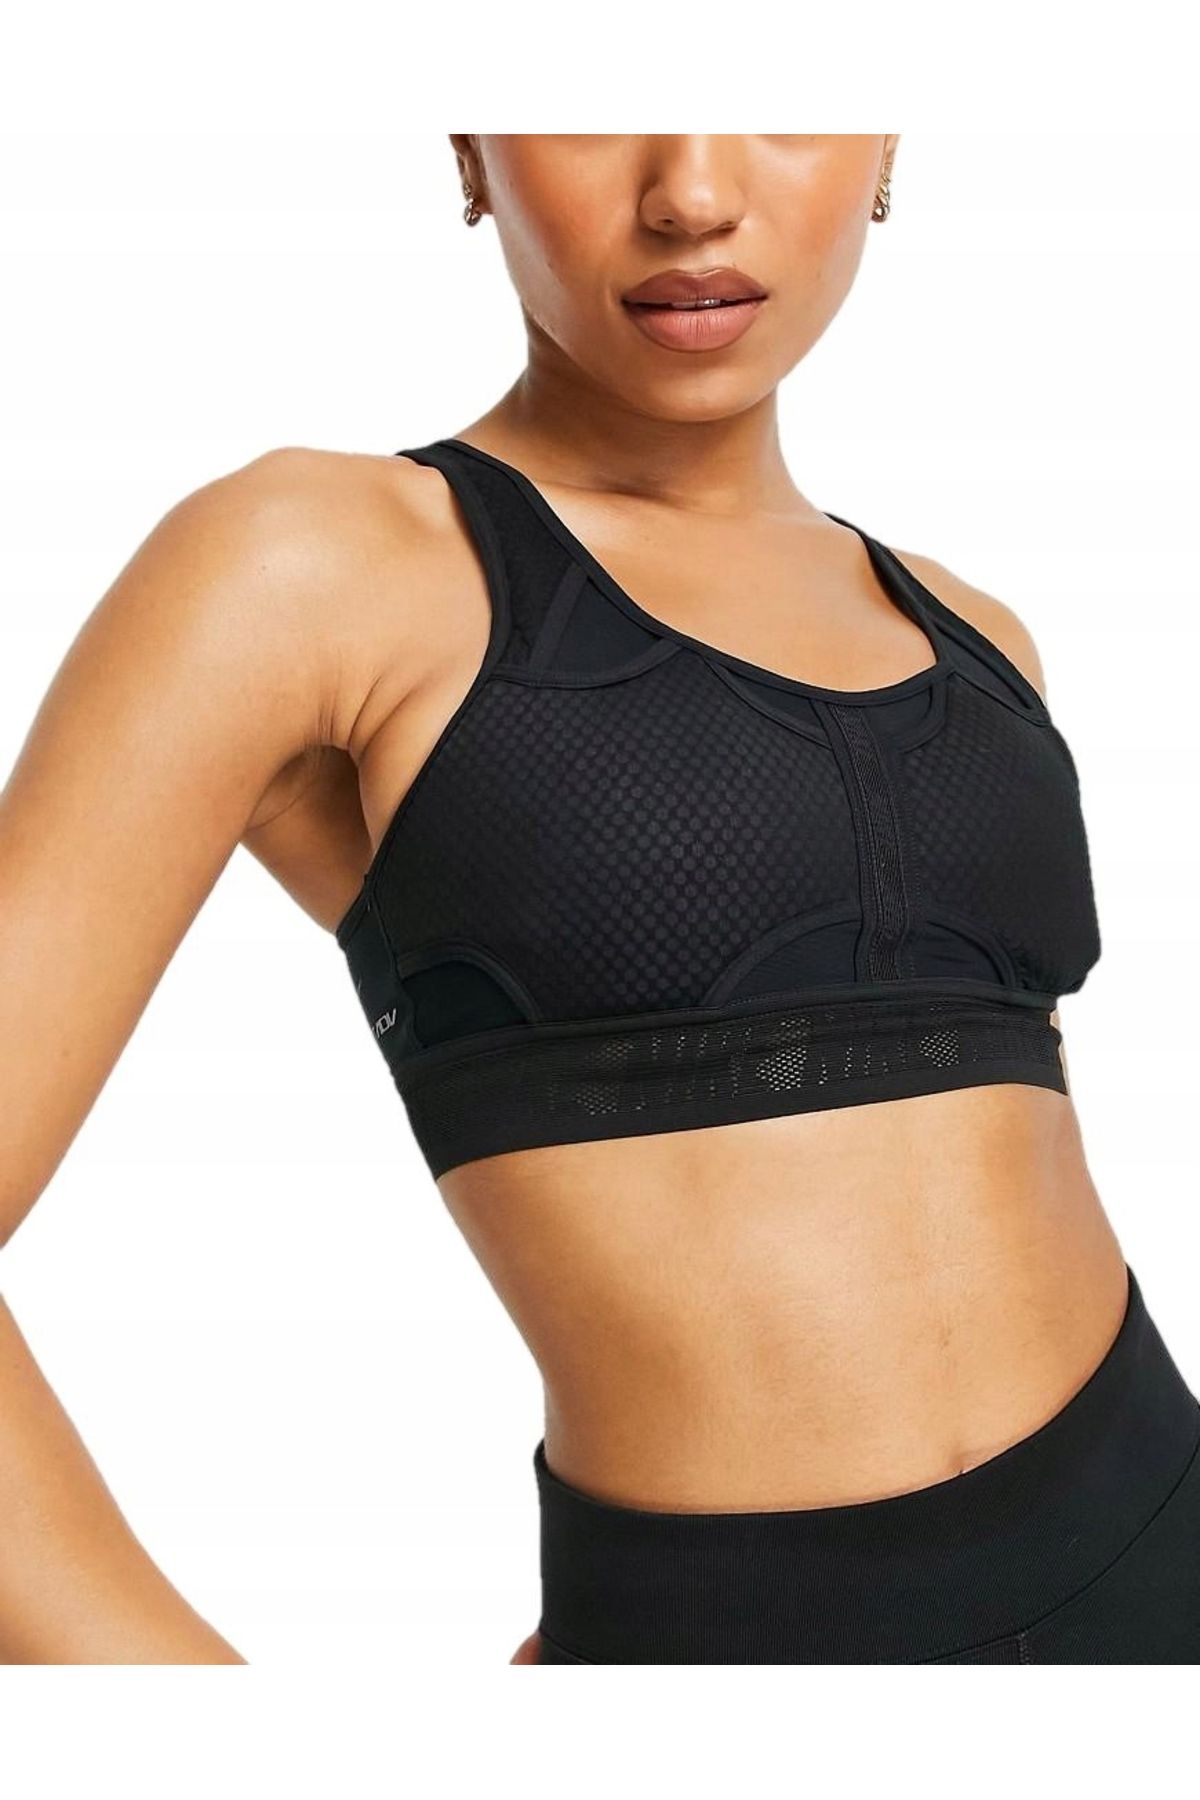 Nike Swoosh Ultrabreathe Medium Support Breathable Women's Medium